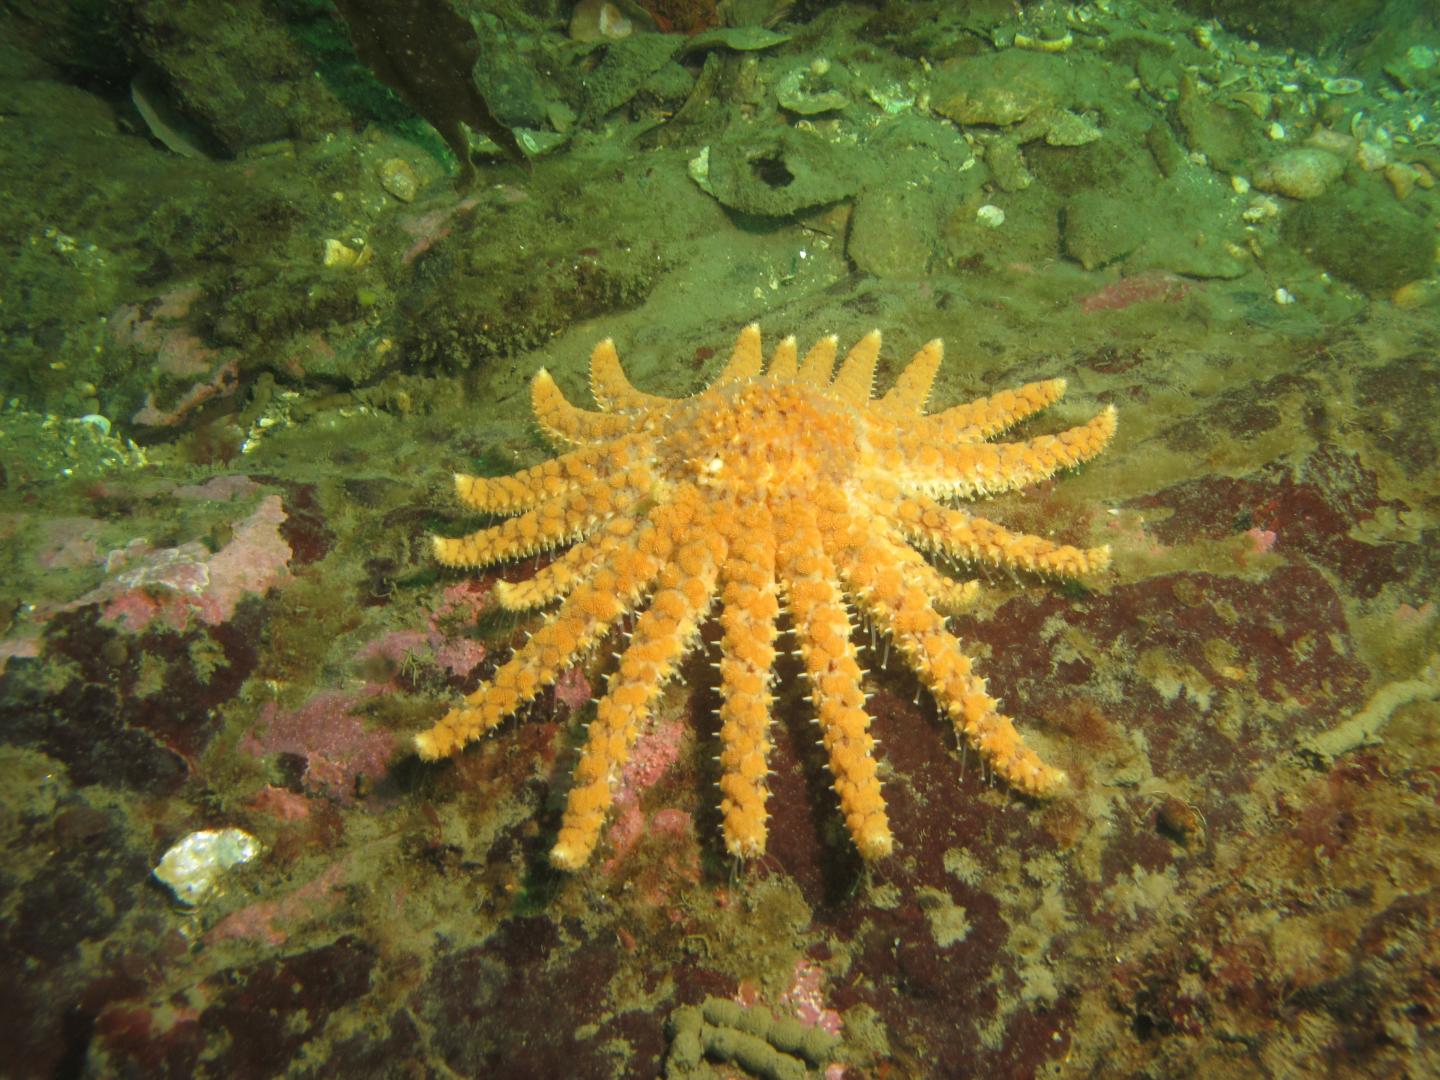 Sea Star Wasting Disease Had Severe Impact on Sunflower Sea Stars in the Salish Sea